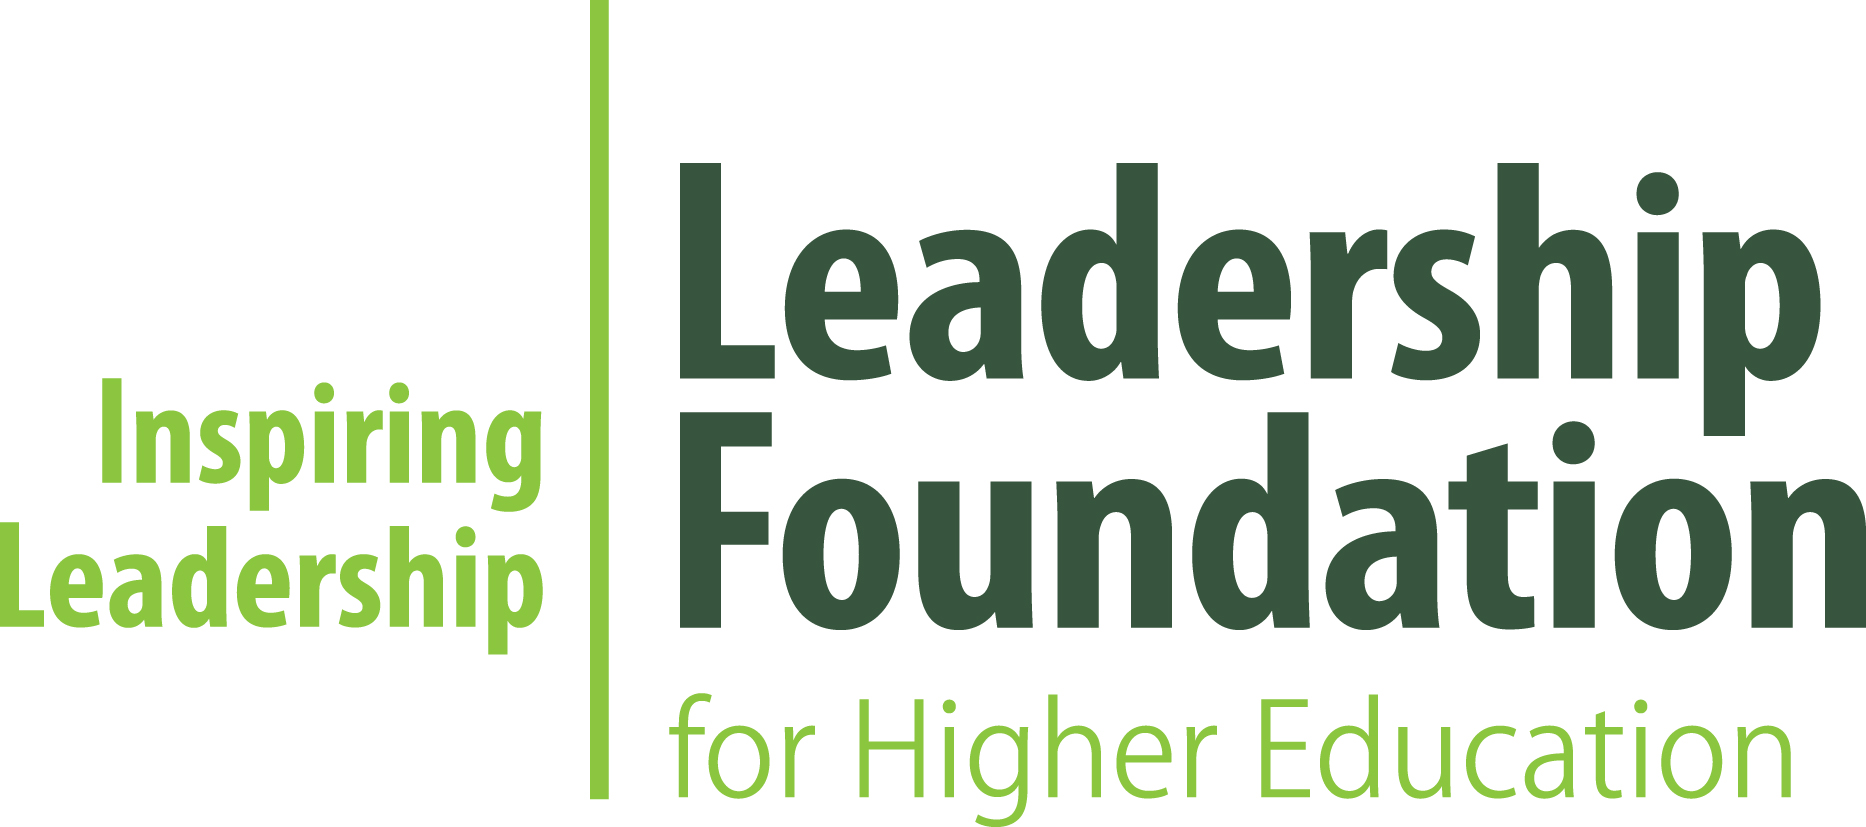 Leadership Foundation for Higher Education